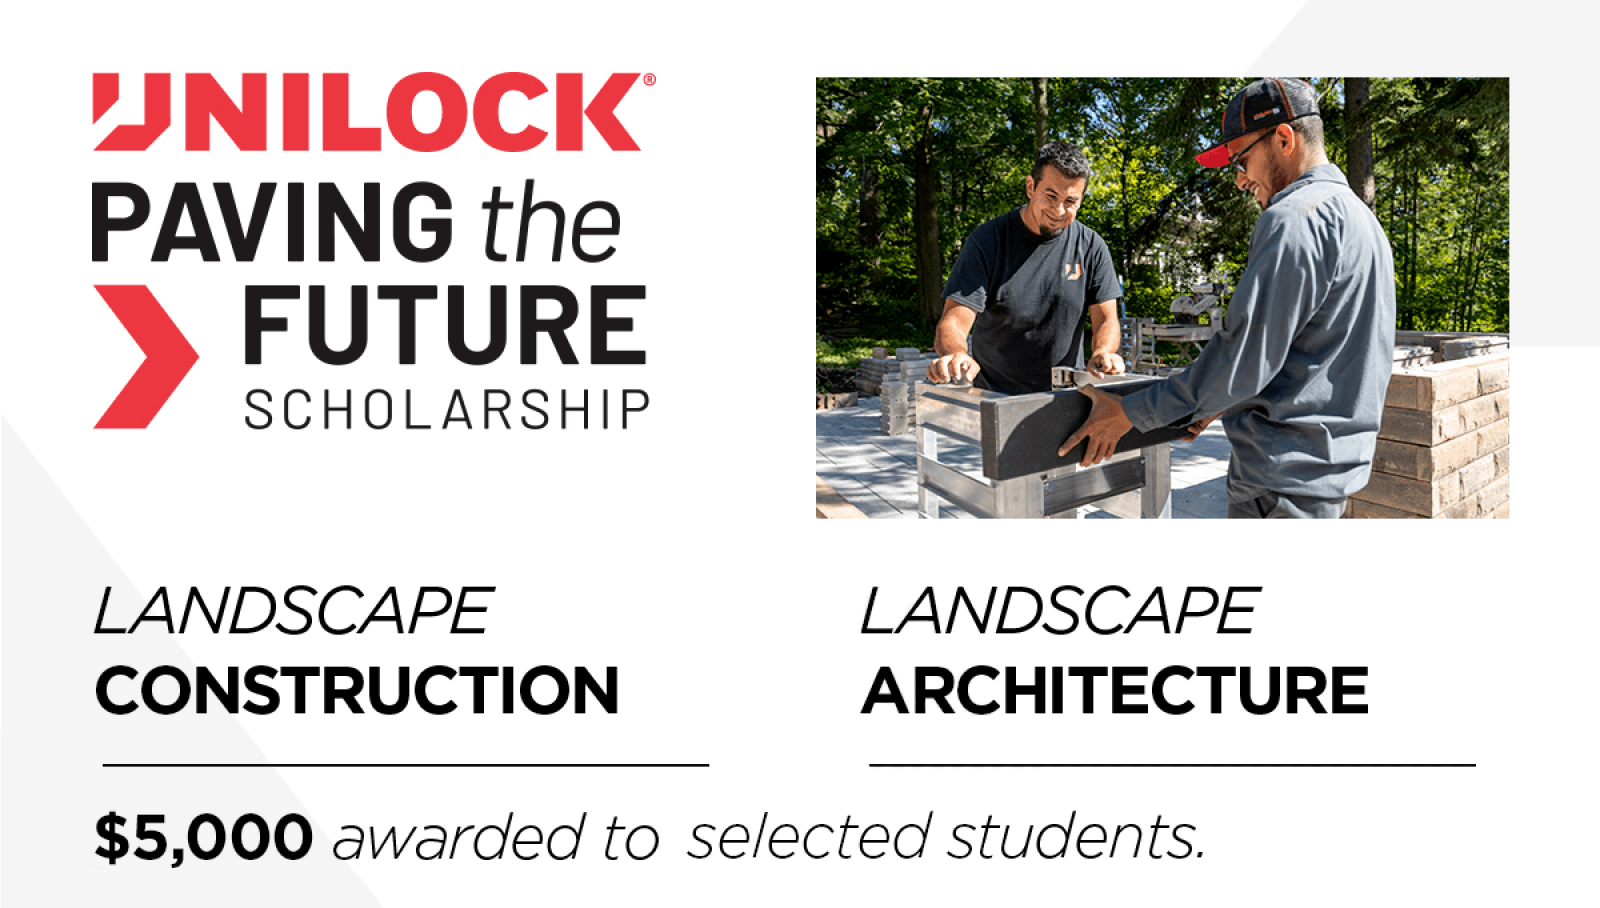 Unilock offers $5,000 scholarships